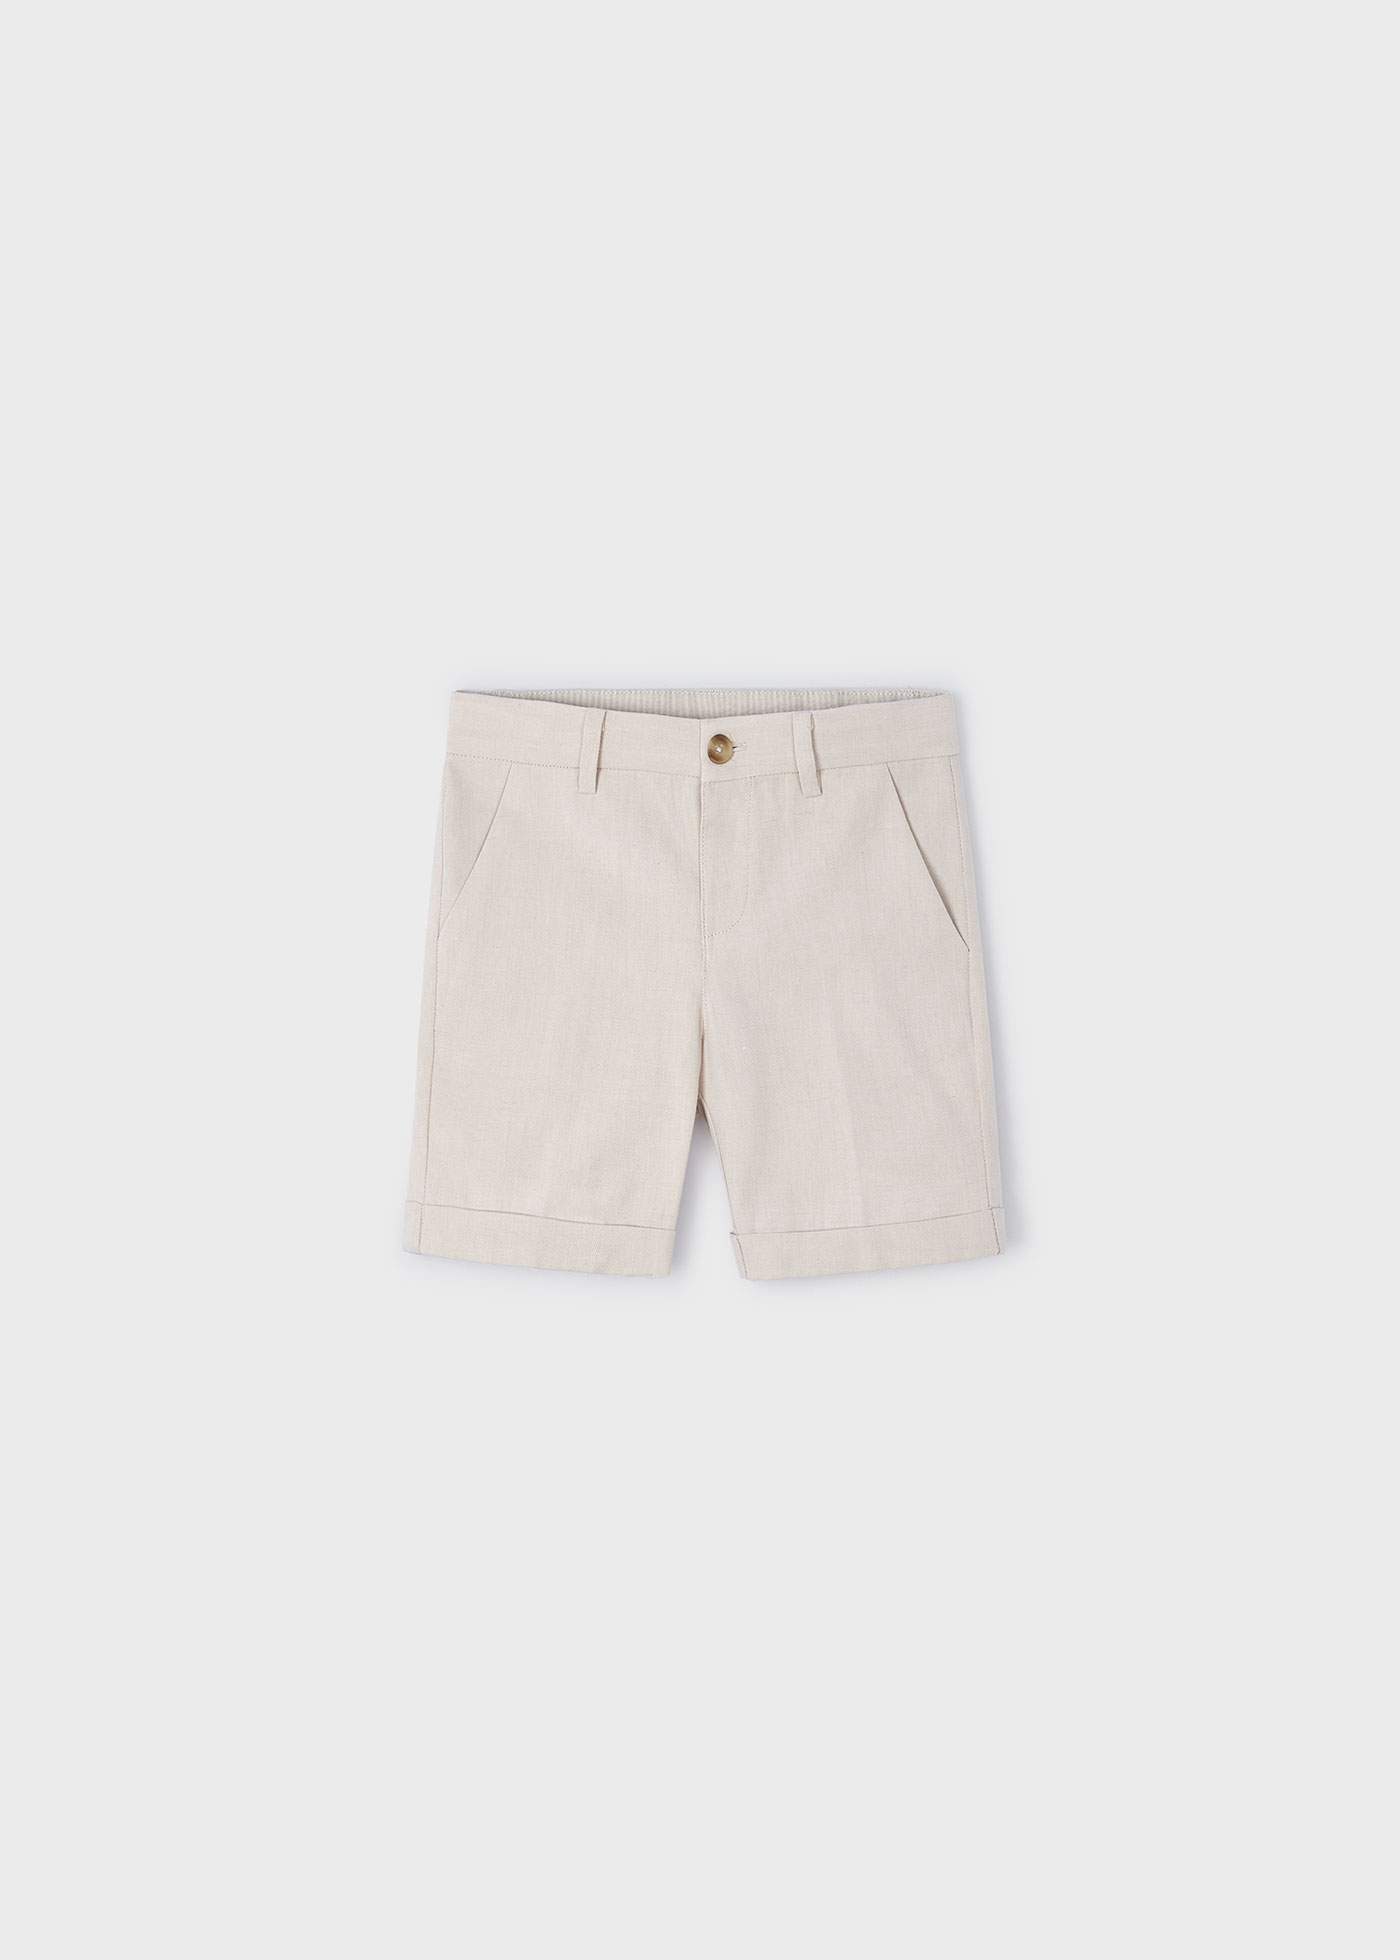 Boys linen chino shorts